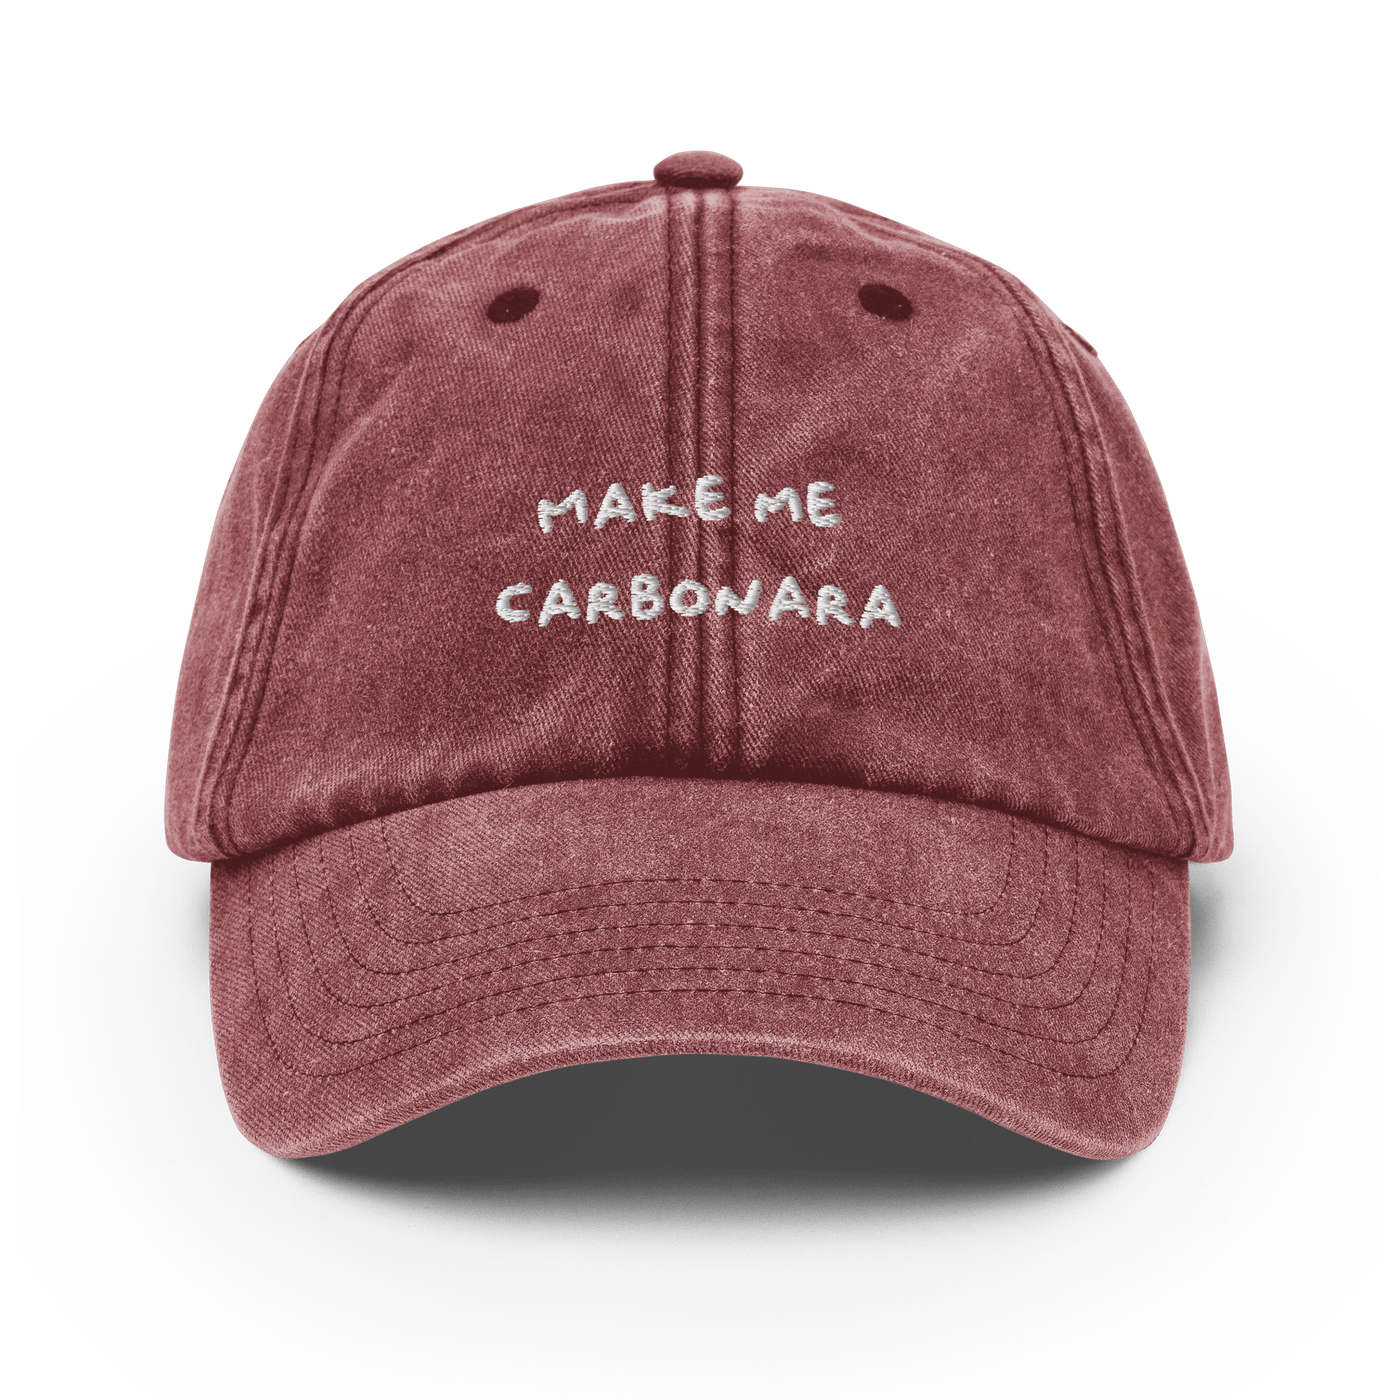 Make me Carbonara Vintage Hat - Vintage Red - - Just Another Cap Store